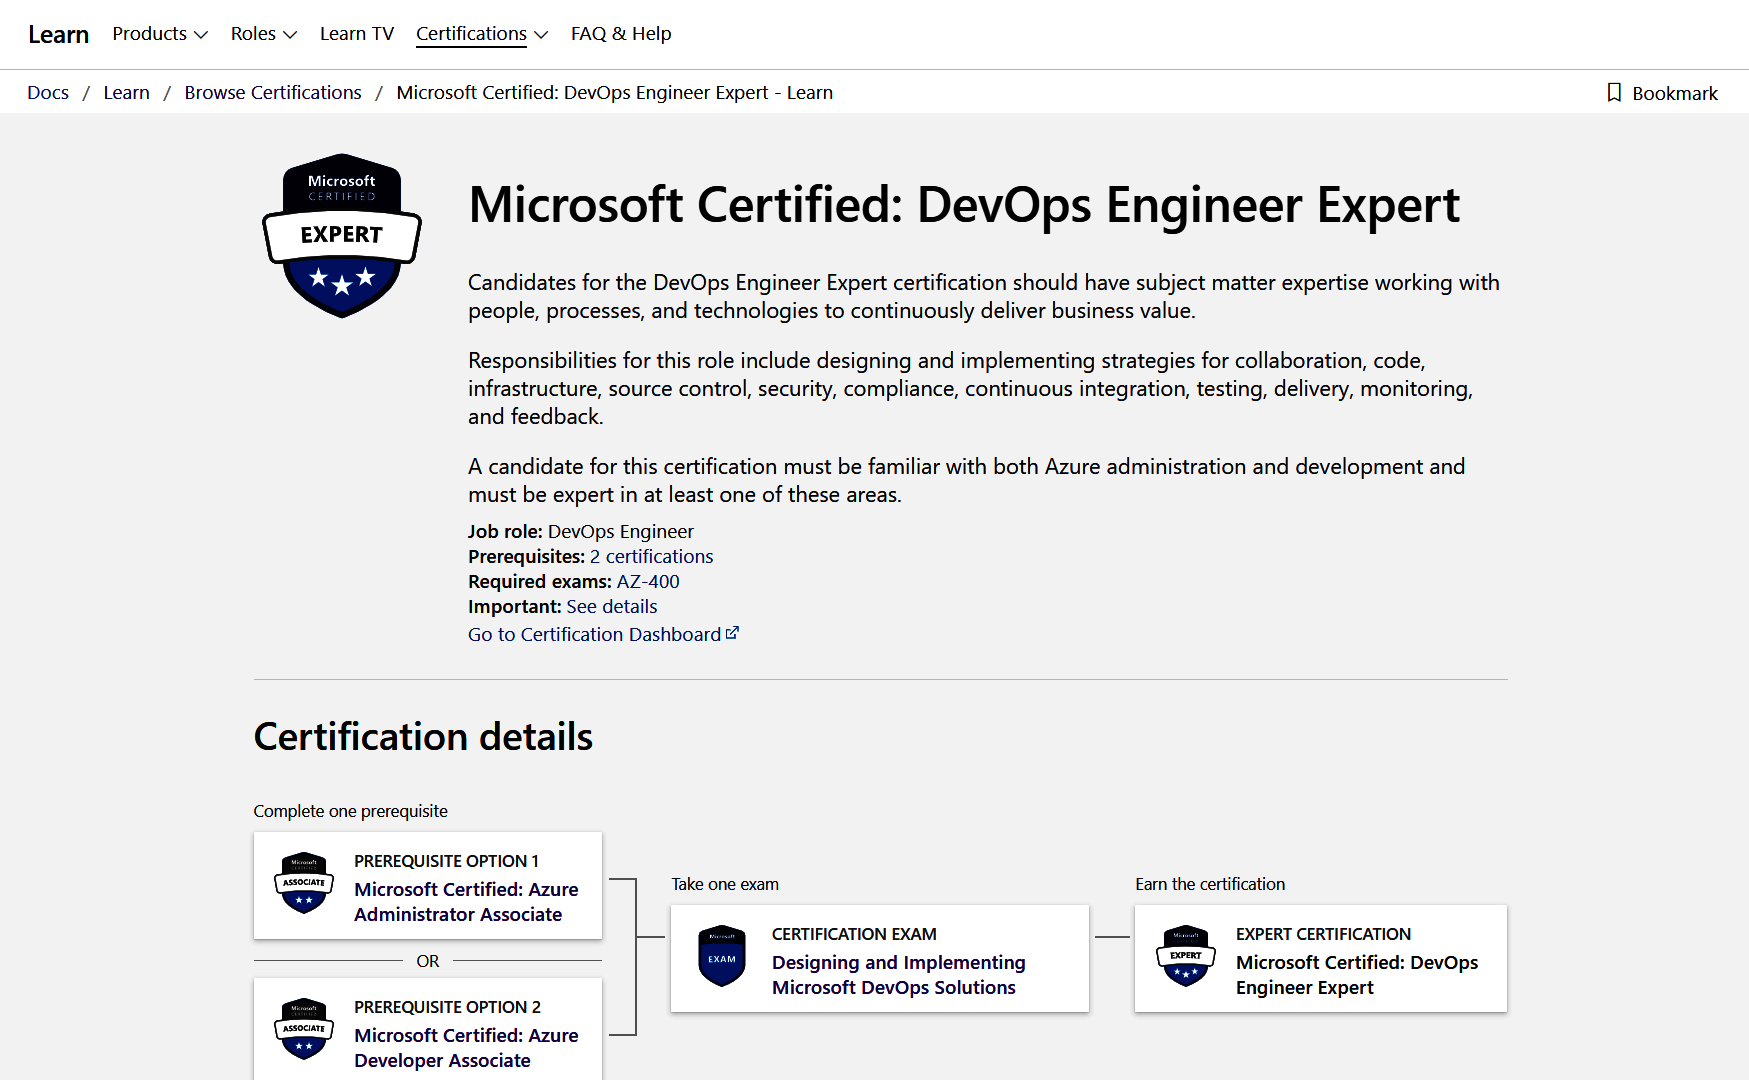 Microsoft Certified DevOps Engineer Expert